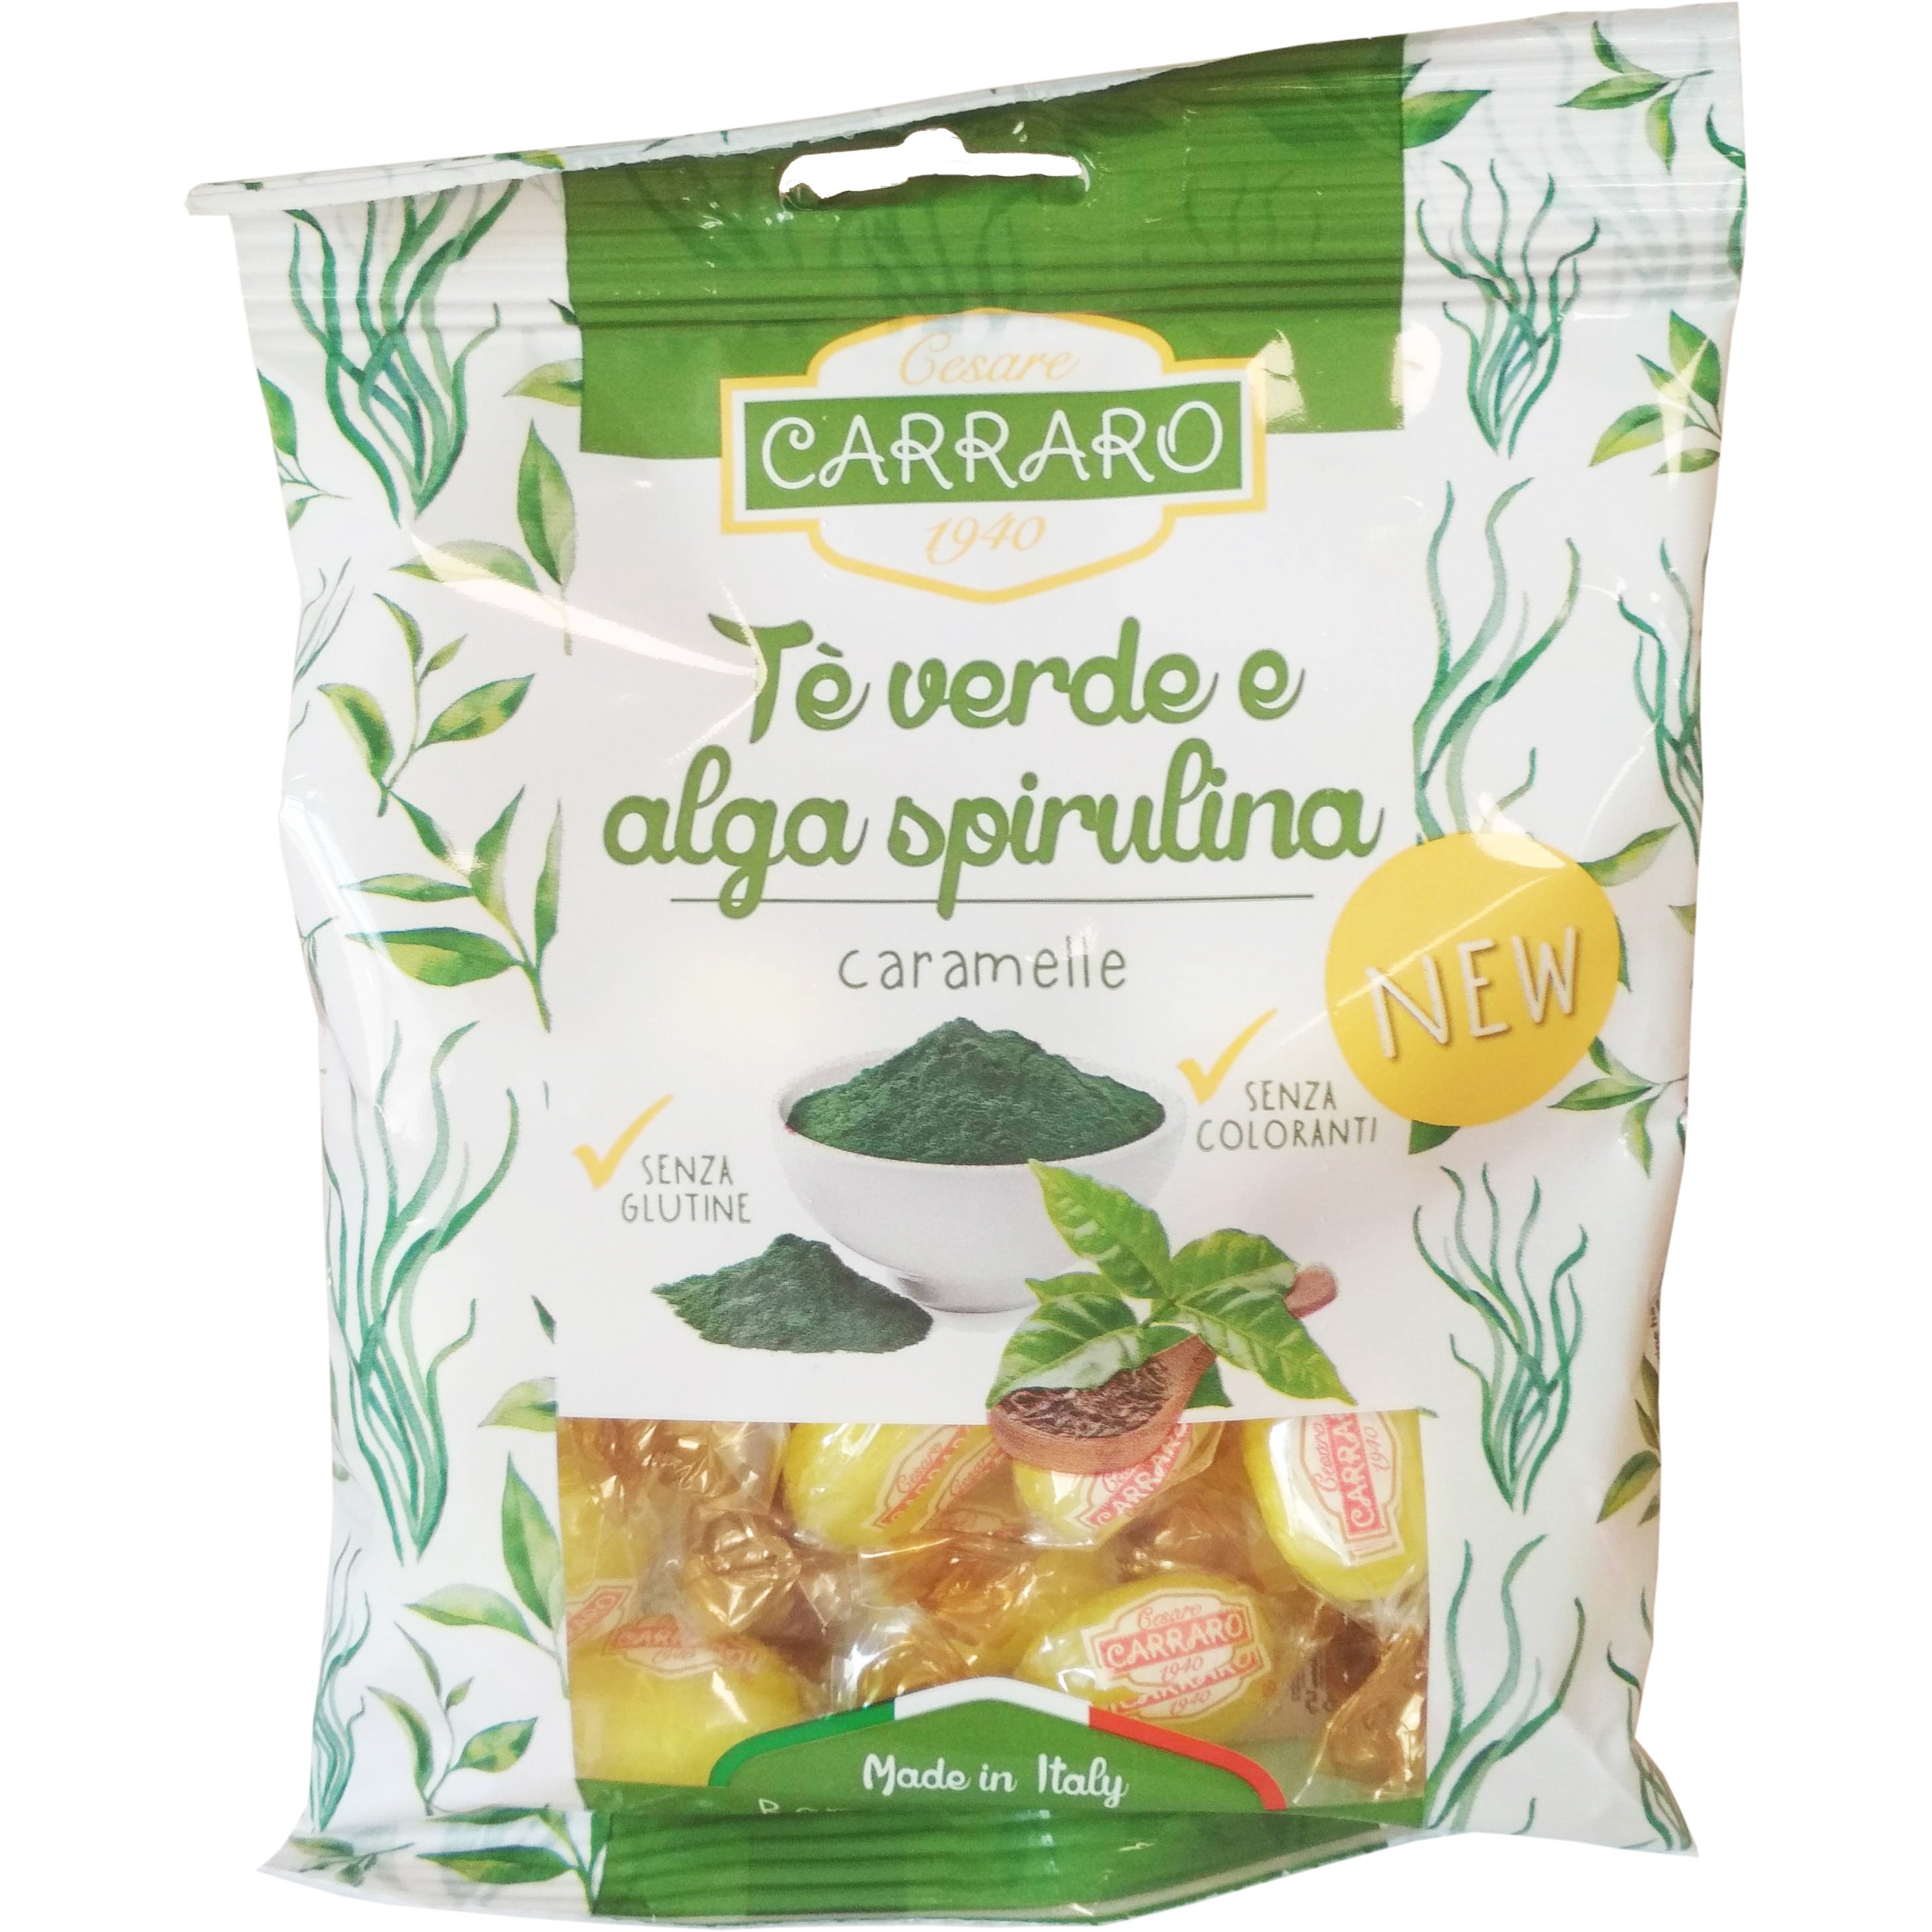 Carraro Caramelle Te Verde e Alga Spirulina Καραμέλες για το Λαιμό με Πράσινο Τσάι & Σπιρουλίνα 100gr 30286